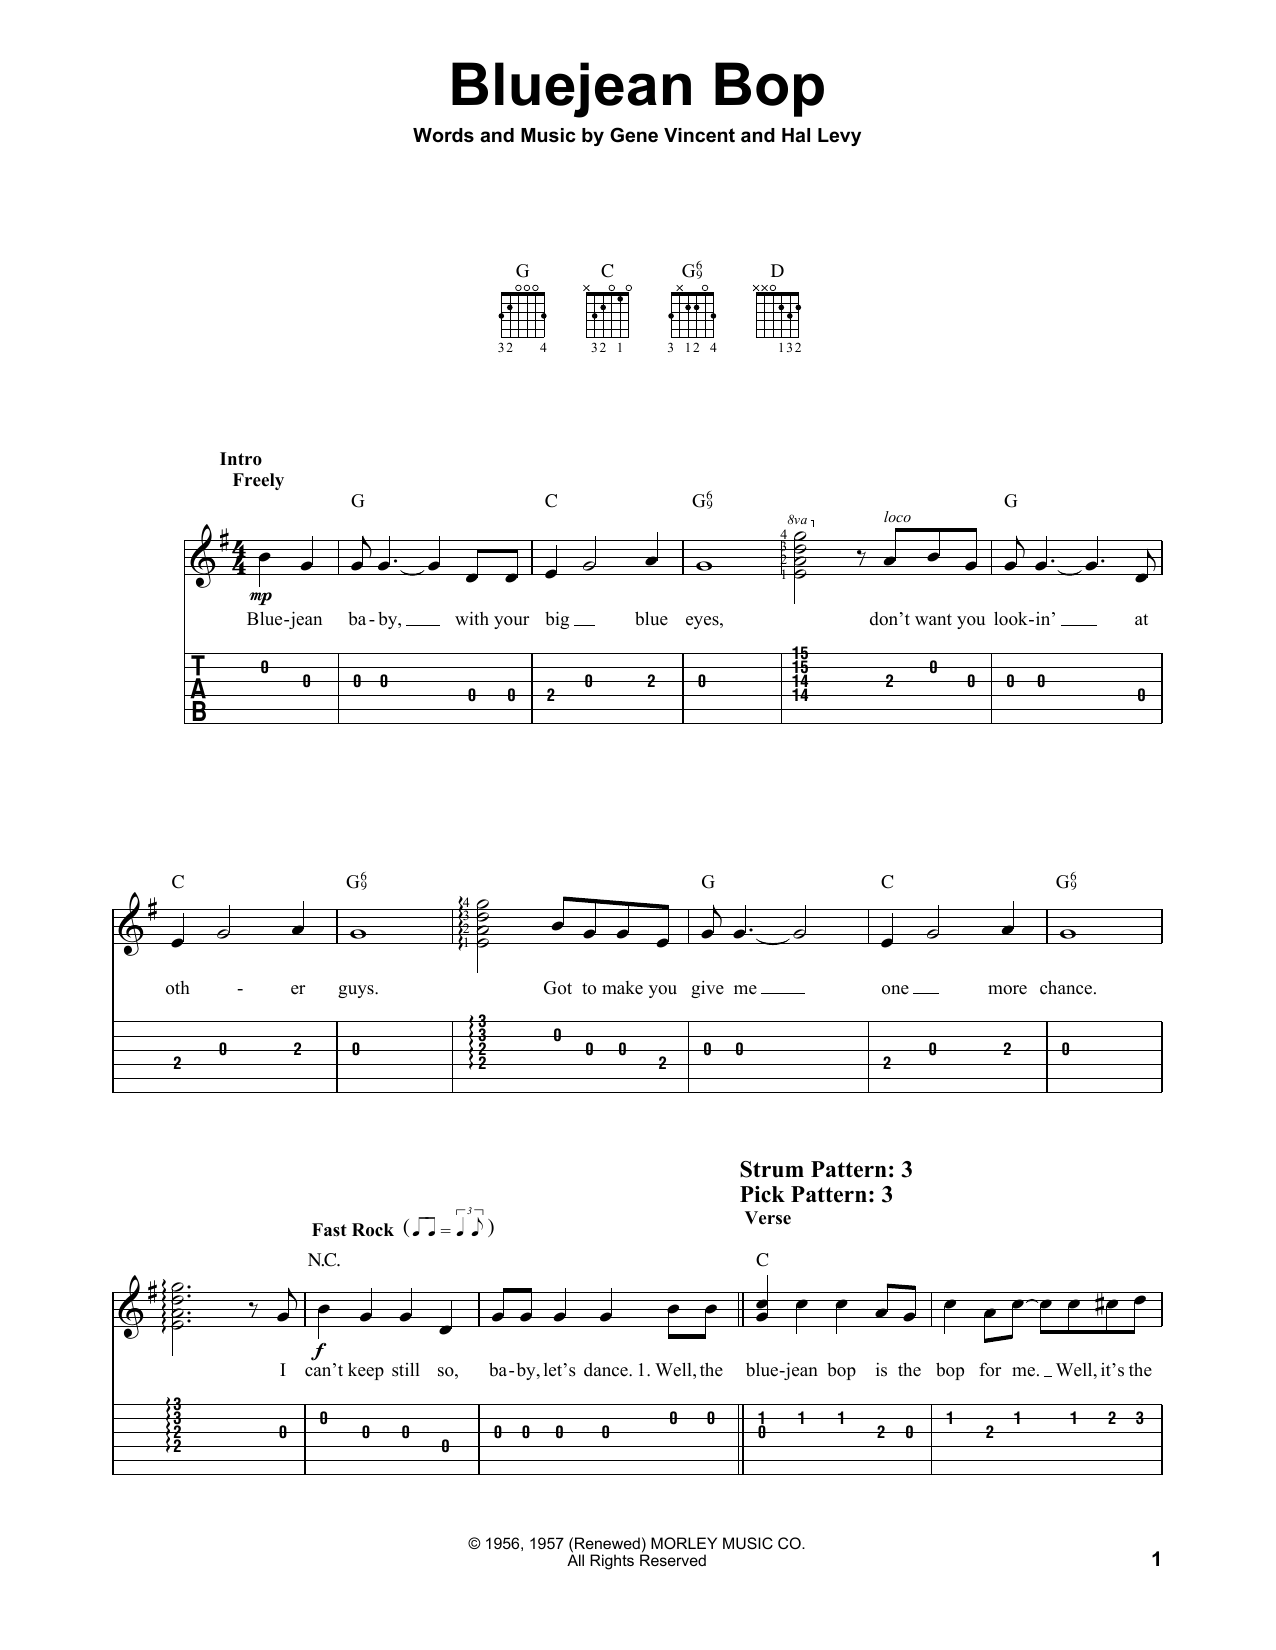 Gene Vincent Bluejean Bop Sheet Music Notes & Chords for Easy Guitar Tab - Download or Print PDF